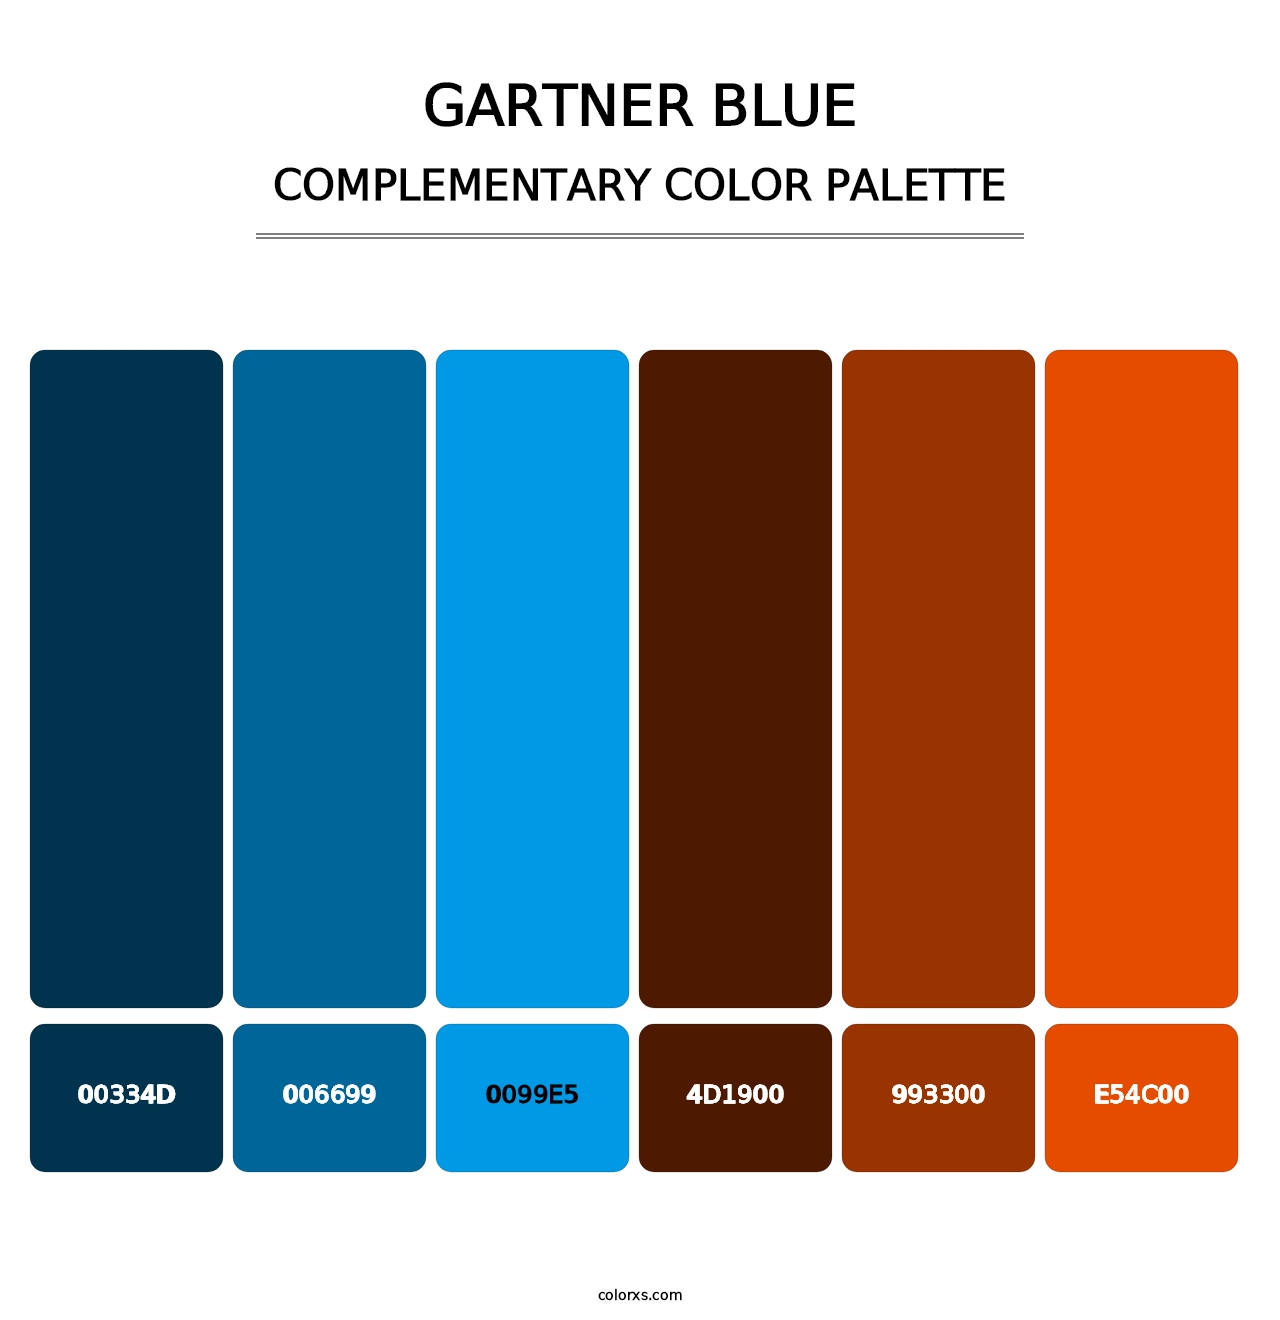 Gartner Blue - Complementary Color Palette